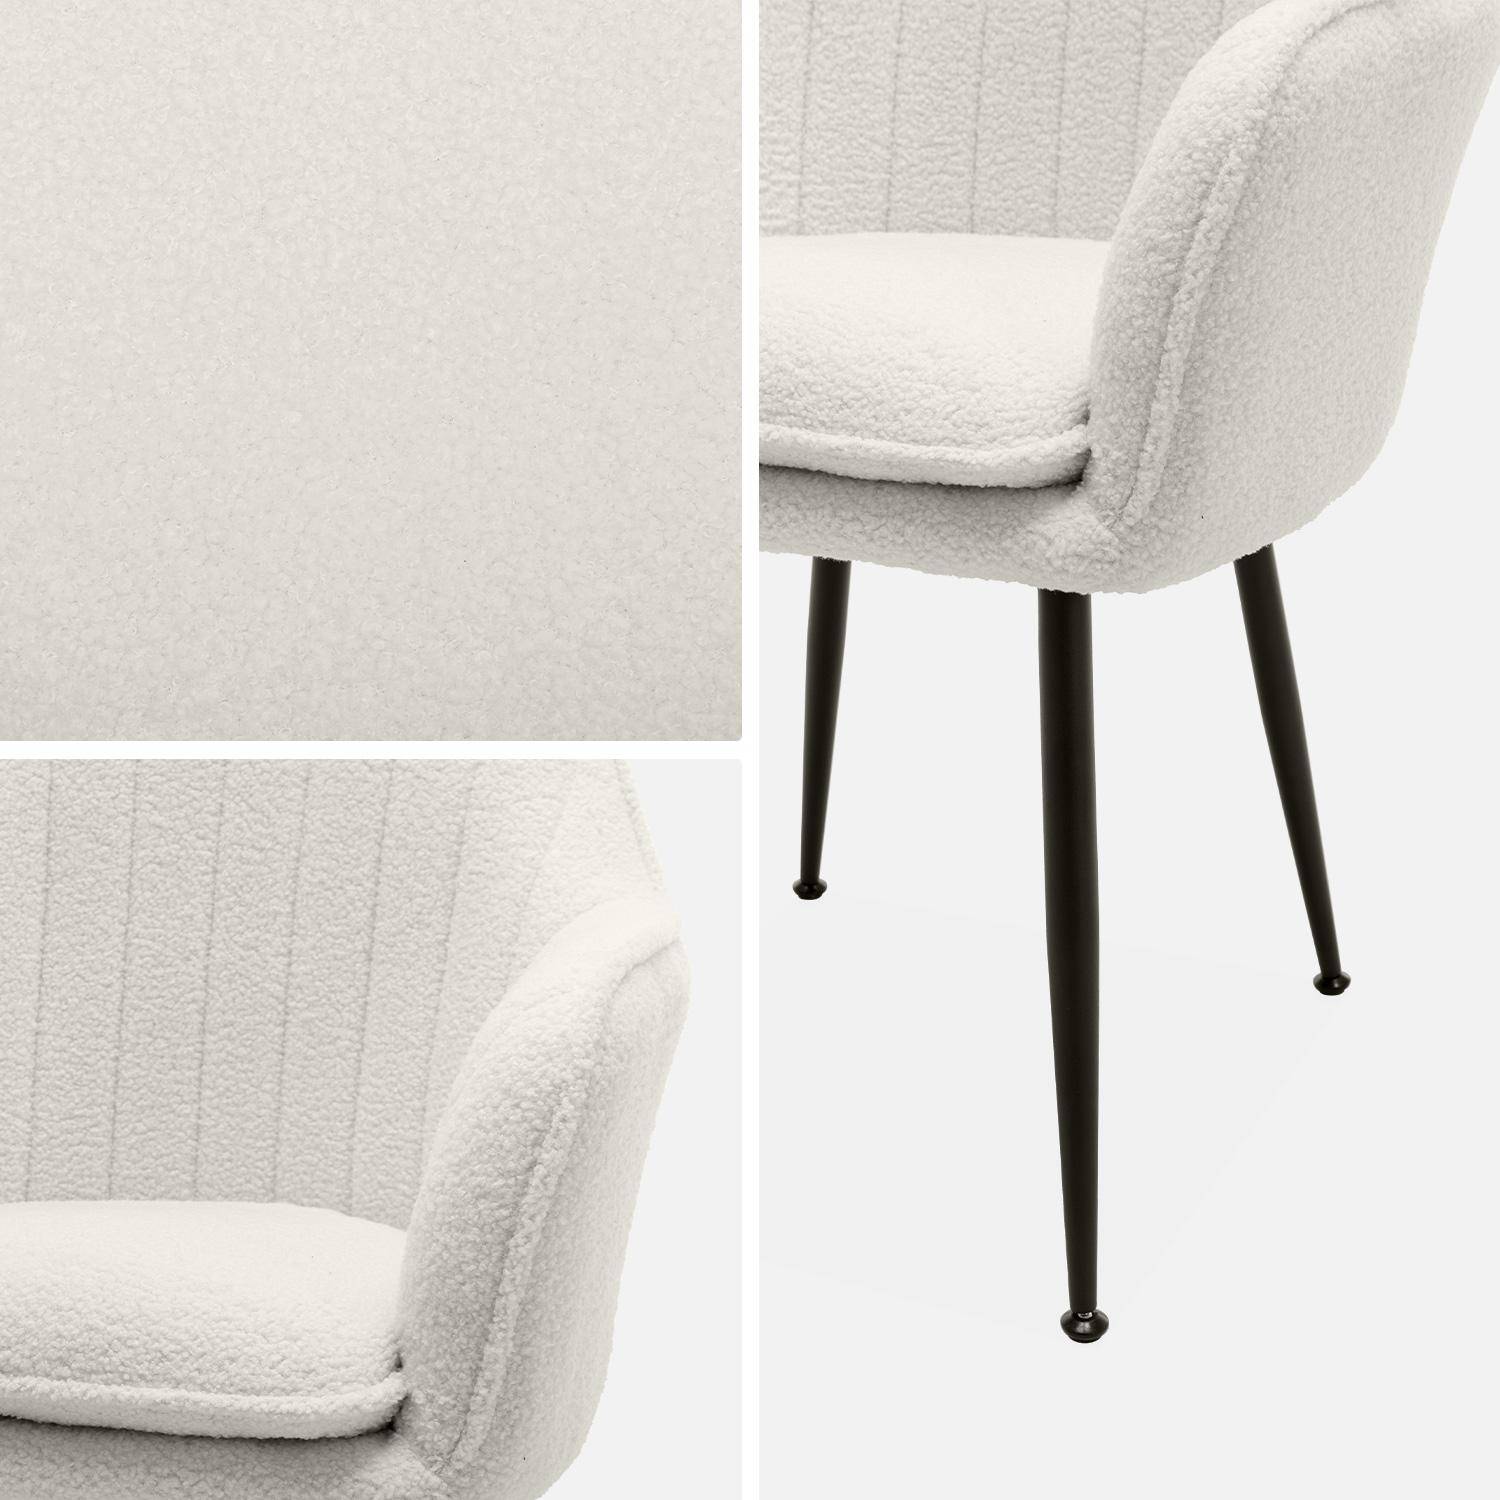 Boucle armchair with metal legs, 58x58x85cm - Shella Boucle - White,sweeek,Photo6